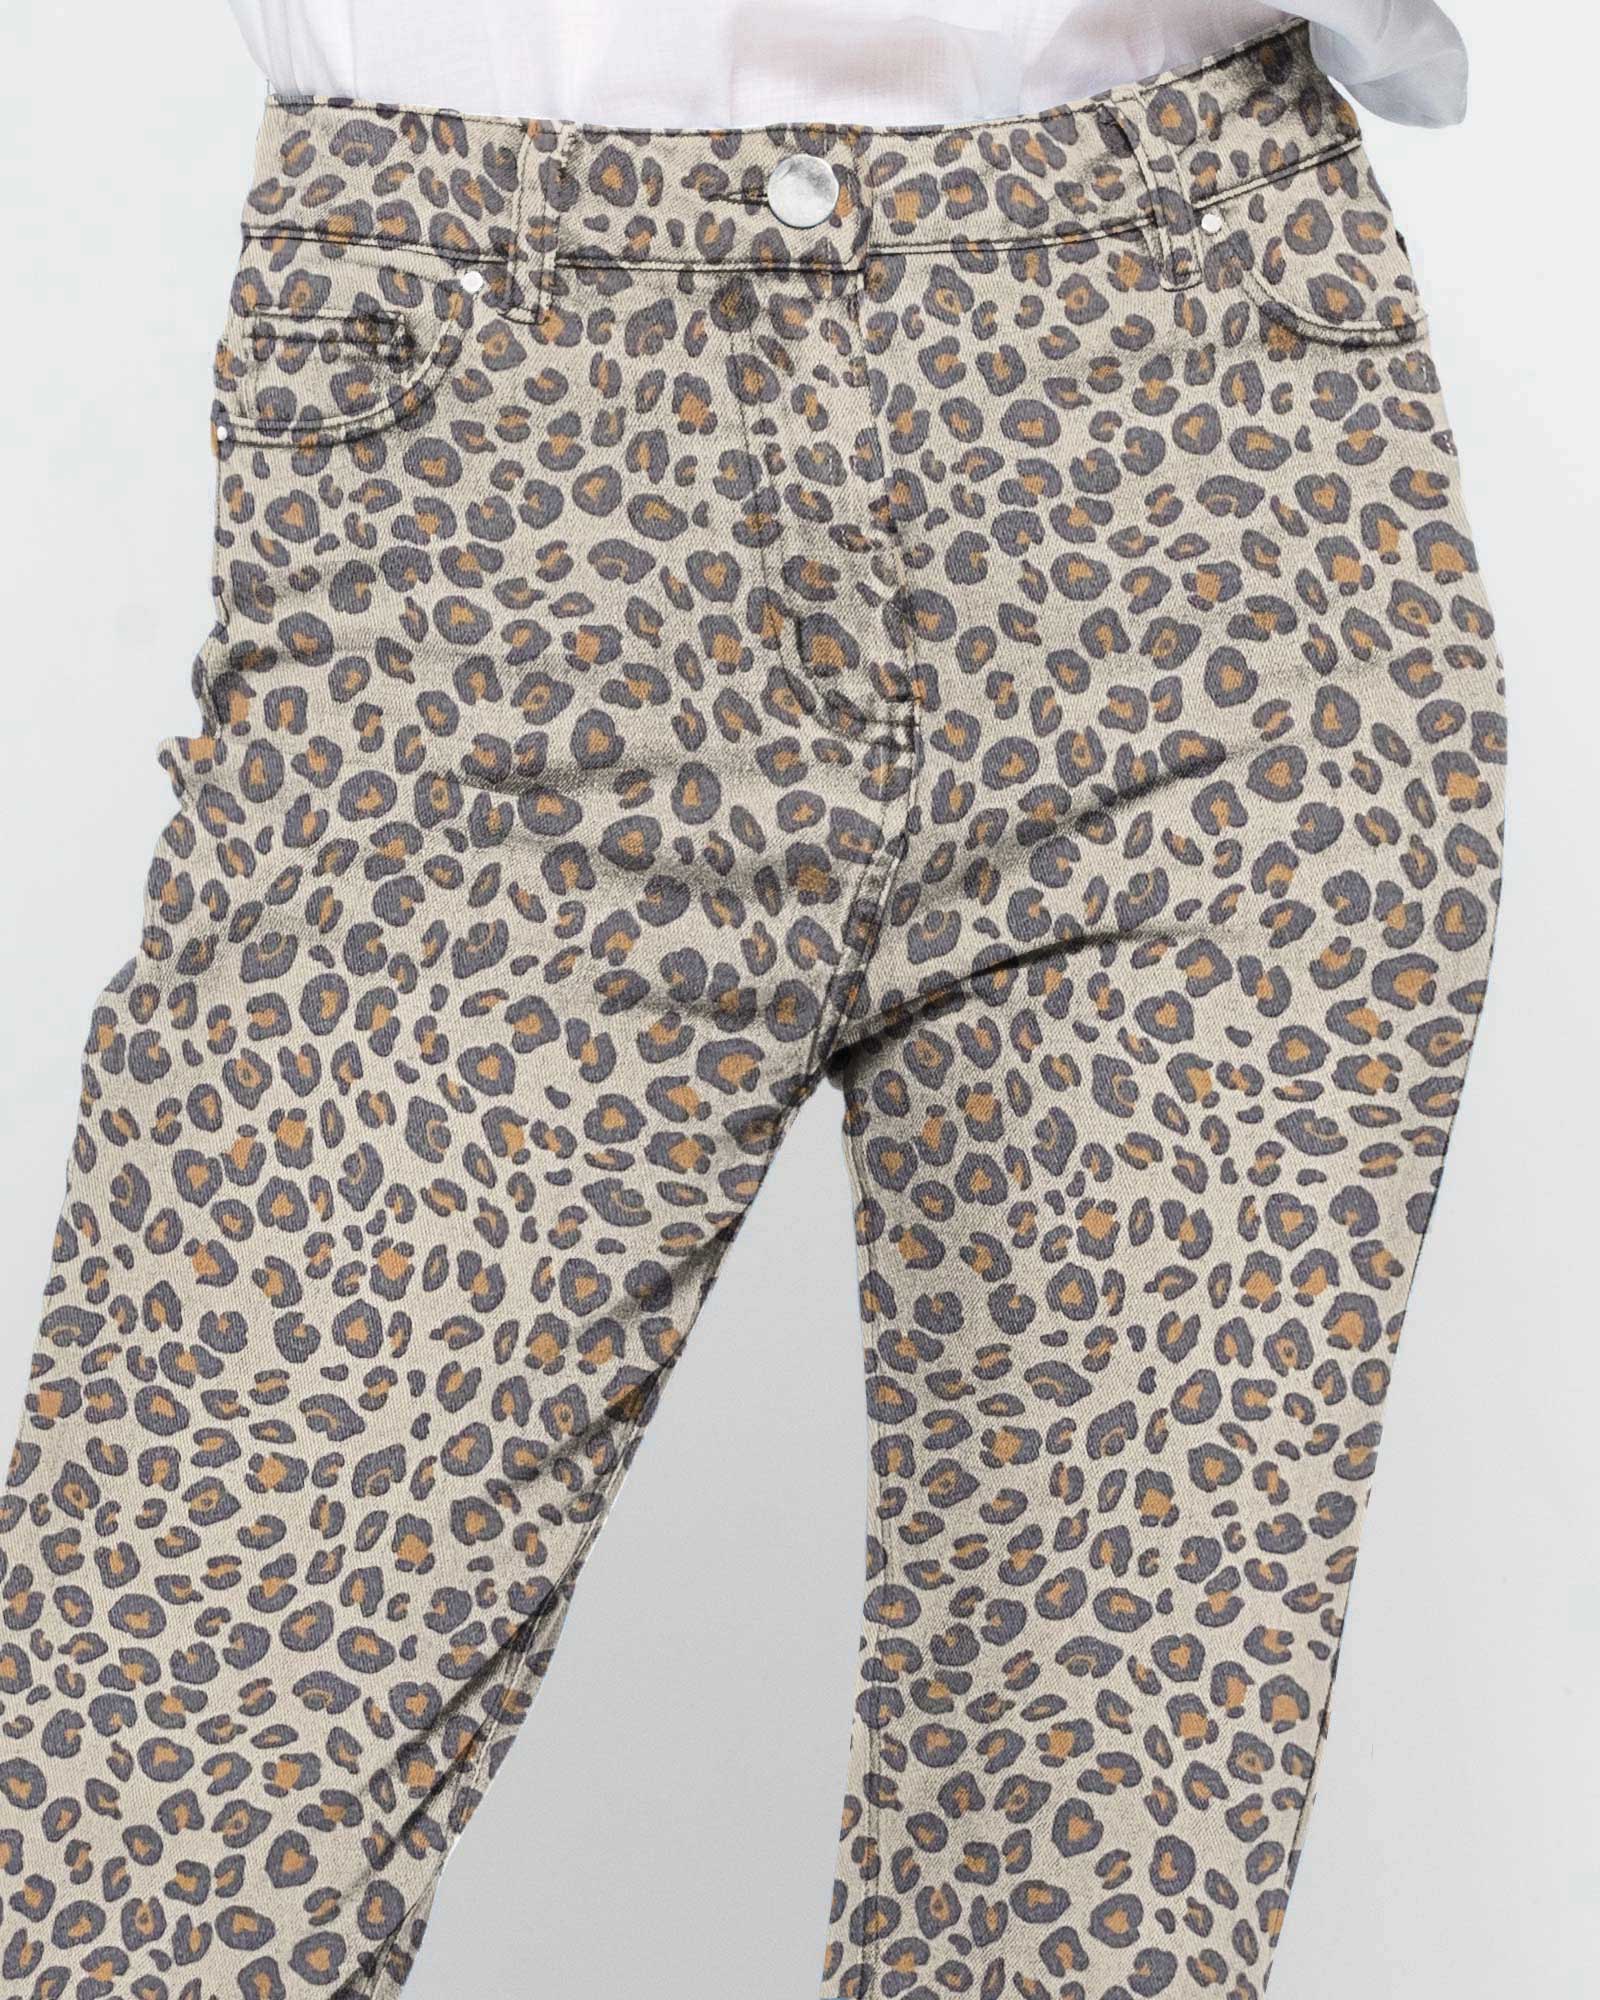 union jean - leopard